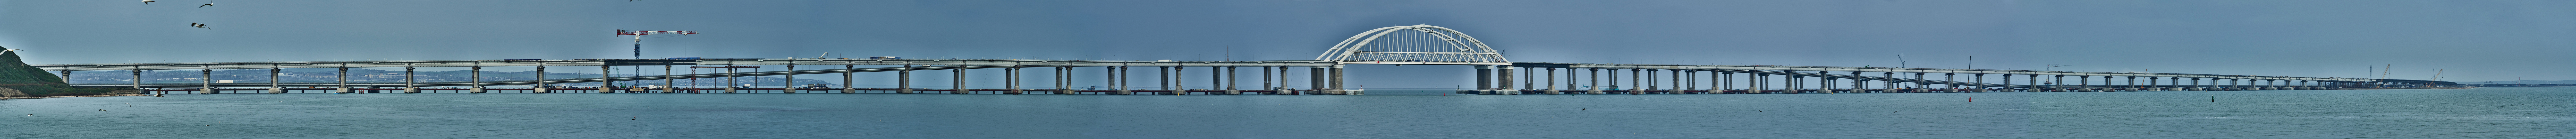 The Crimean Bridge